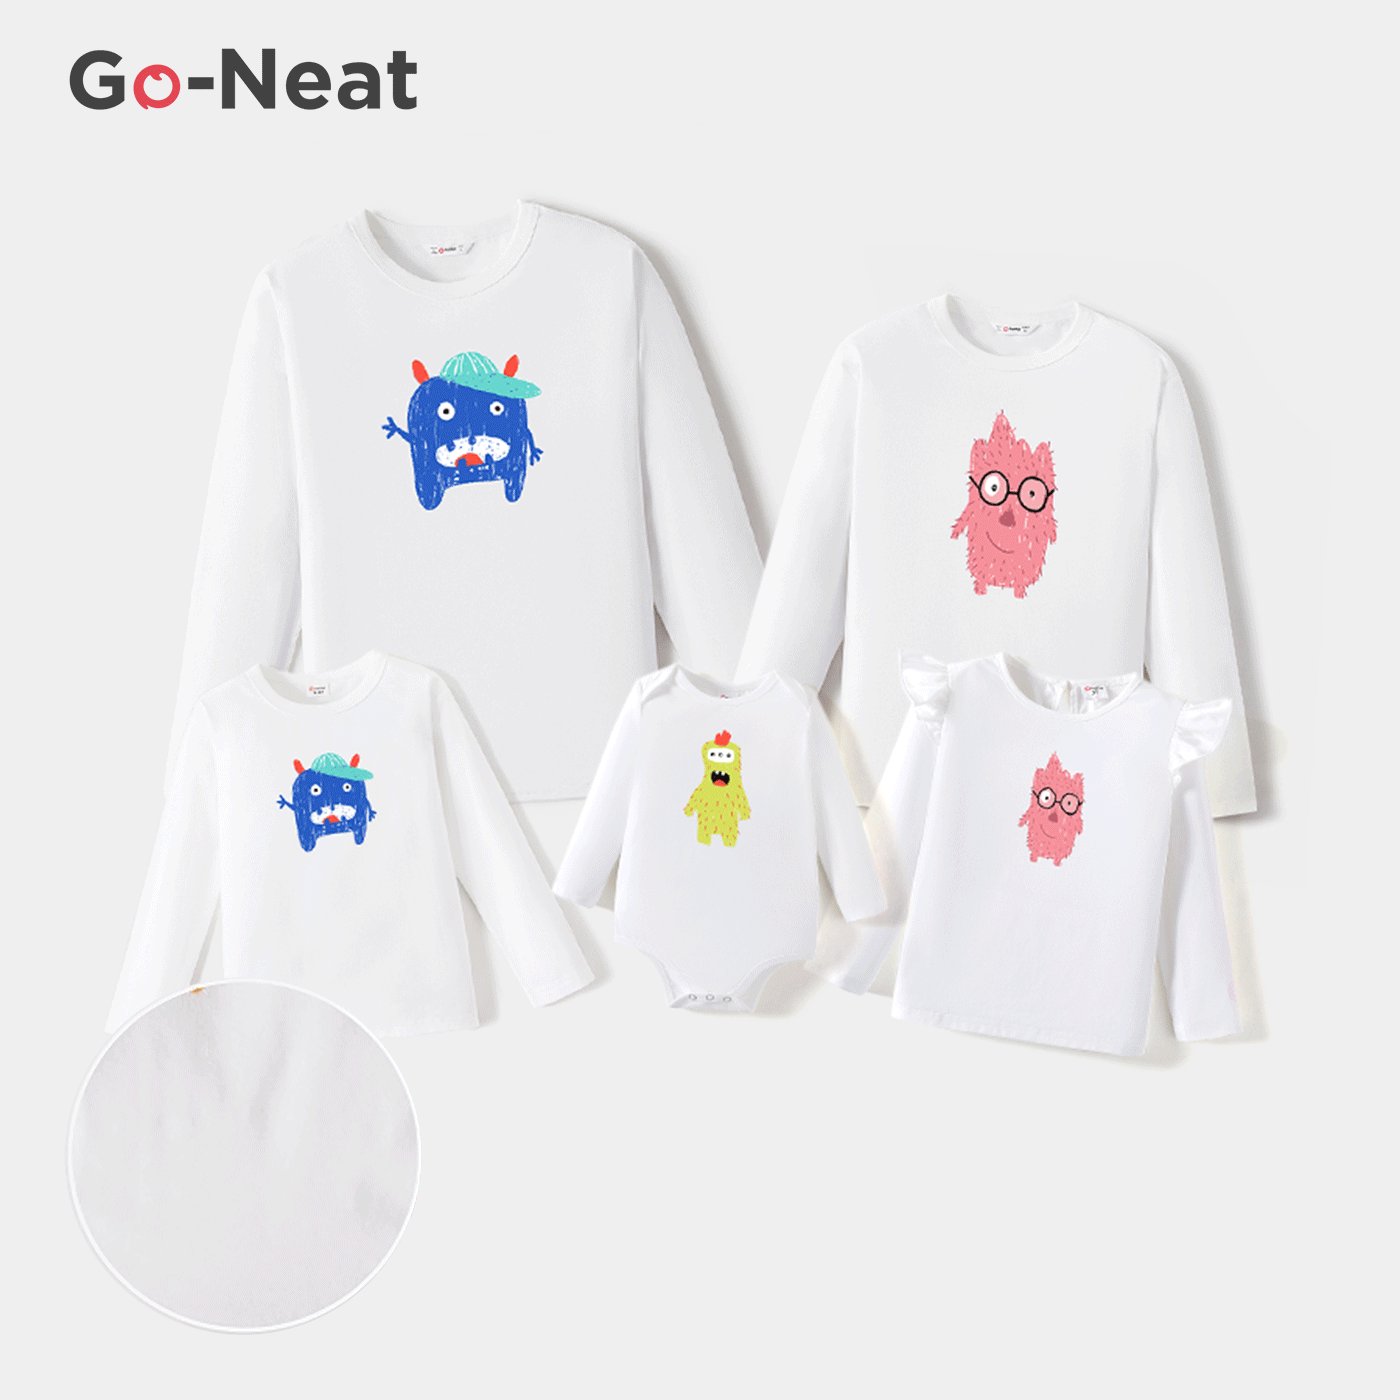 Go-Neat Resistente a manchas Conjuntos de roupa para a família Look de família Estampado animal Manga comprida Tops